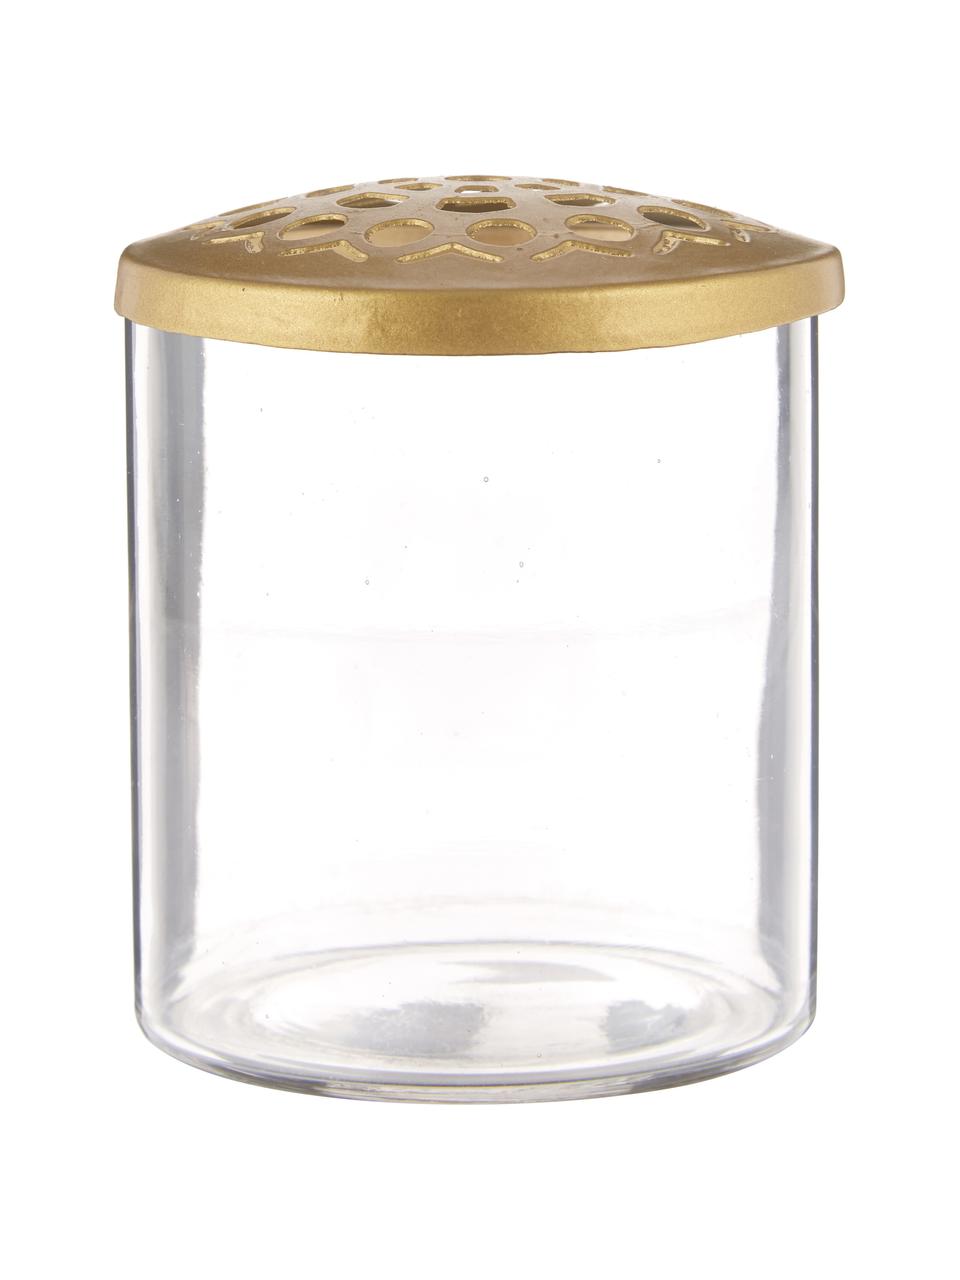 Set 2 vasi con coperchio ottonato Kassandra, Vaso: vetro, Coperchio: acciaio inossidabile otto, Vaso: trasparente Coperchio: ottone, Set in varie misure